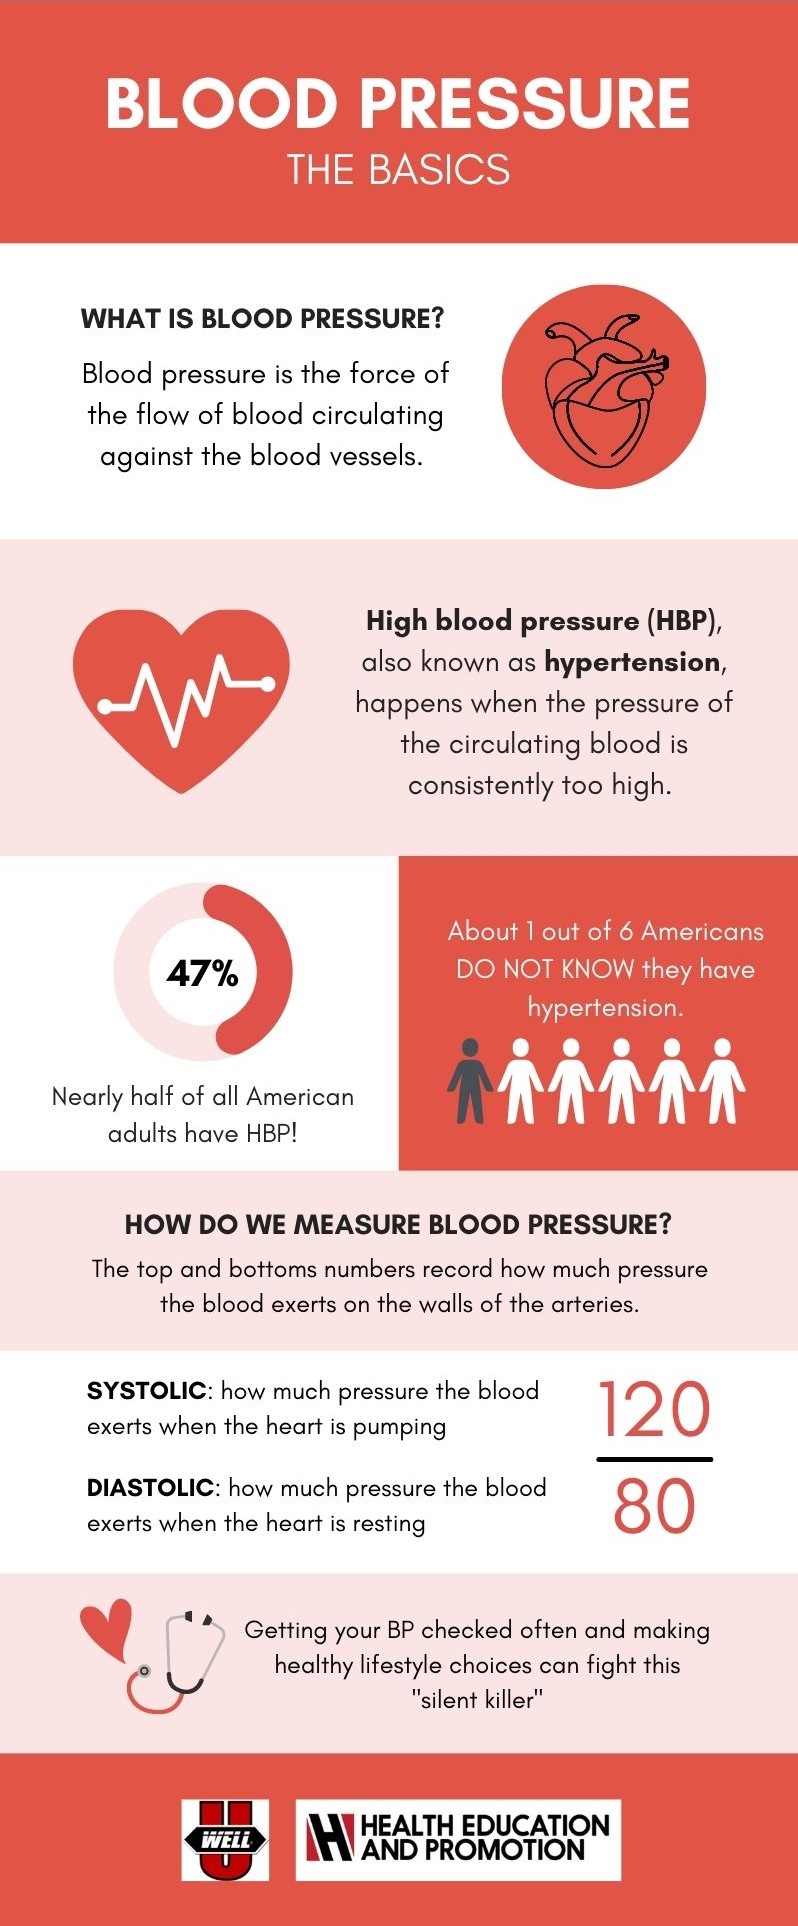 Hypertension and nephrology